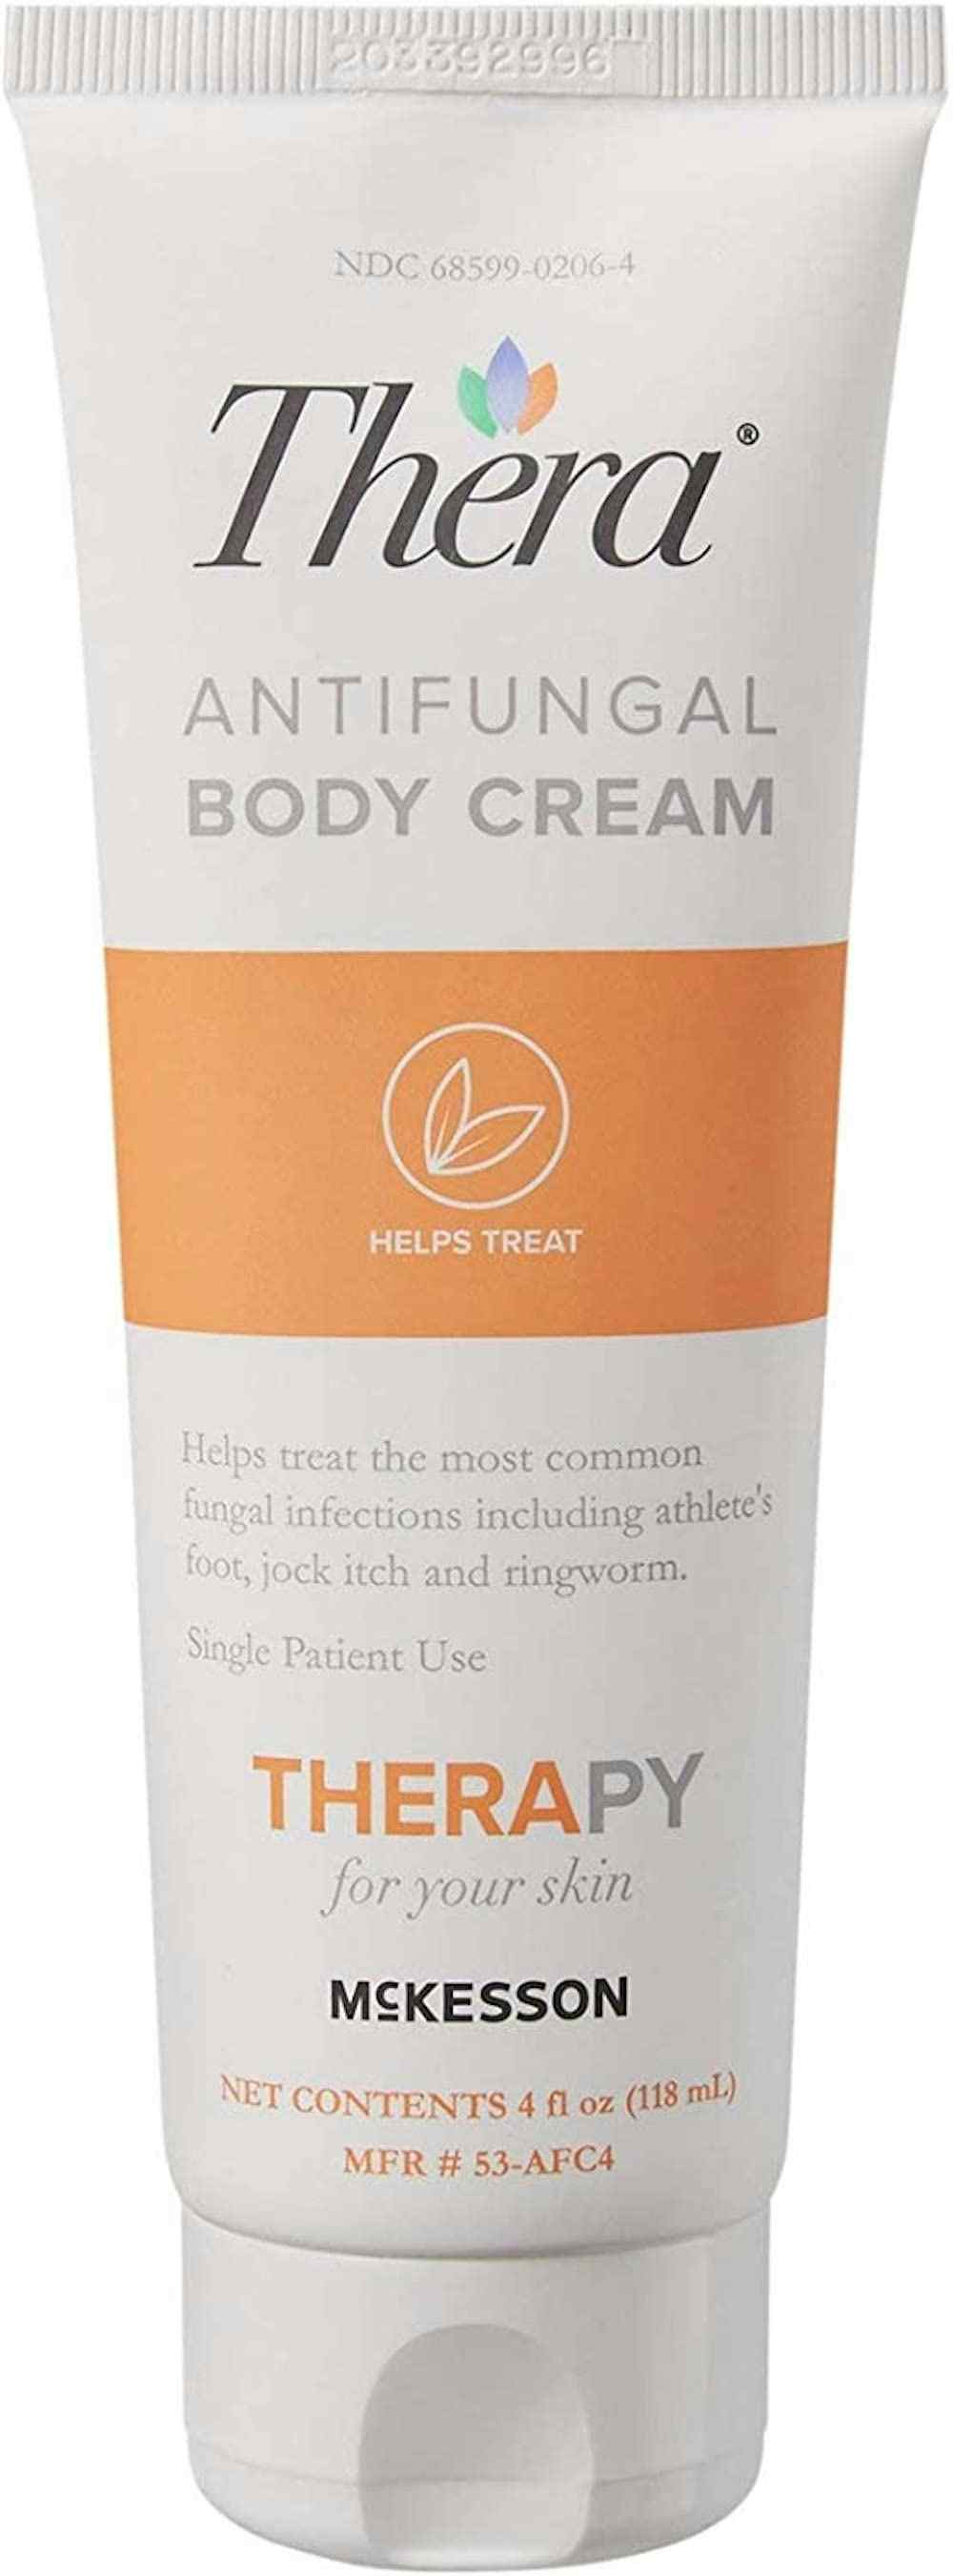 Thera Antifungal Body Cream, 4 oz., 53-AFC4, 1 Tube